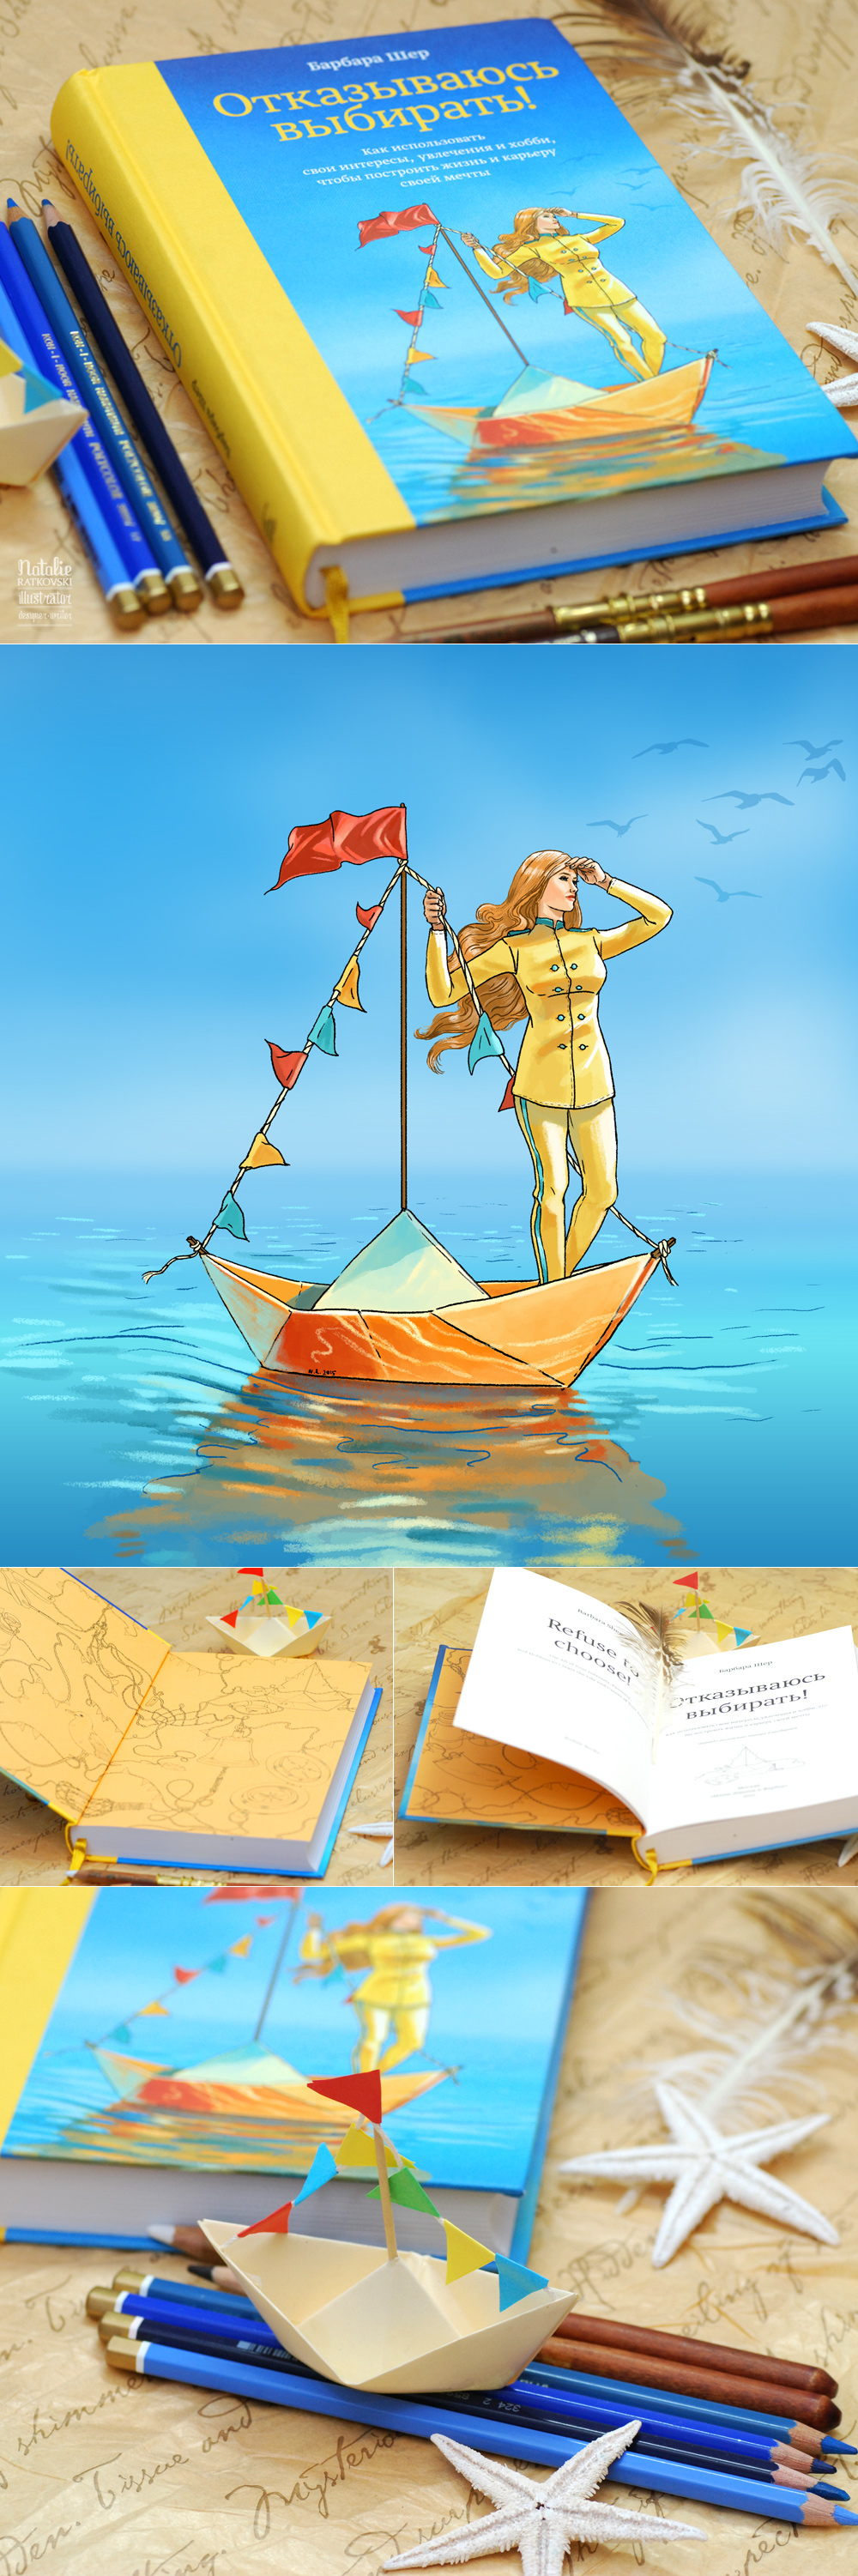 cover illustration book illustration barbara sher refuse to choose natalie ratkovski